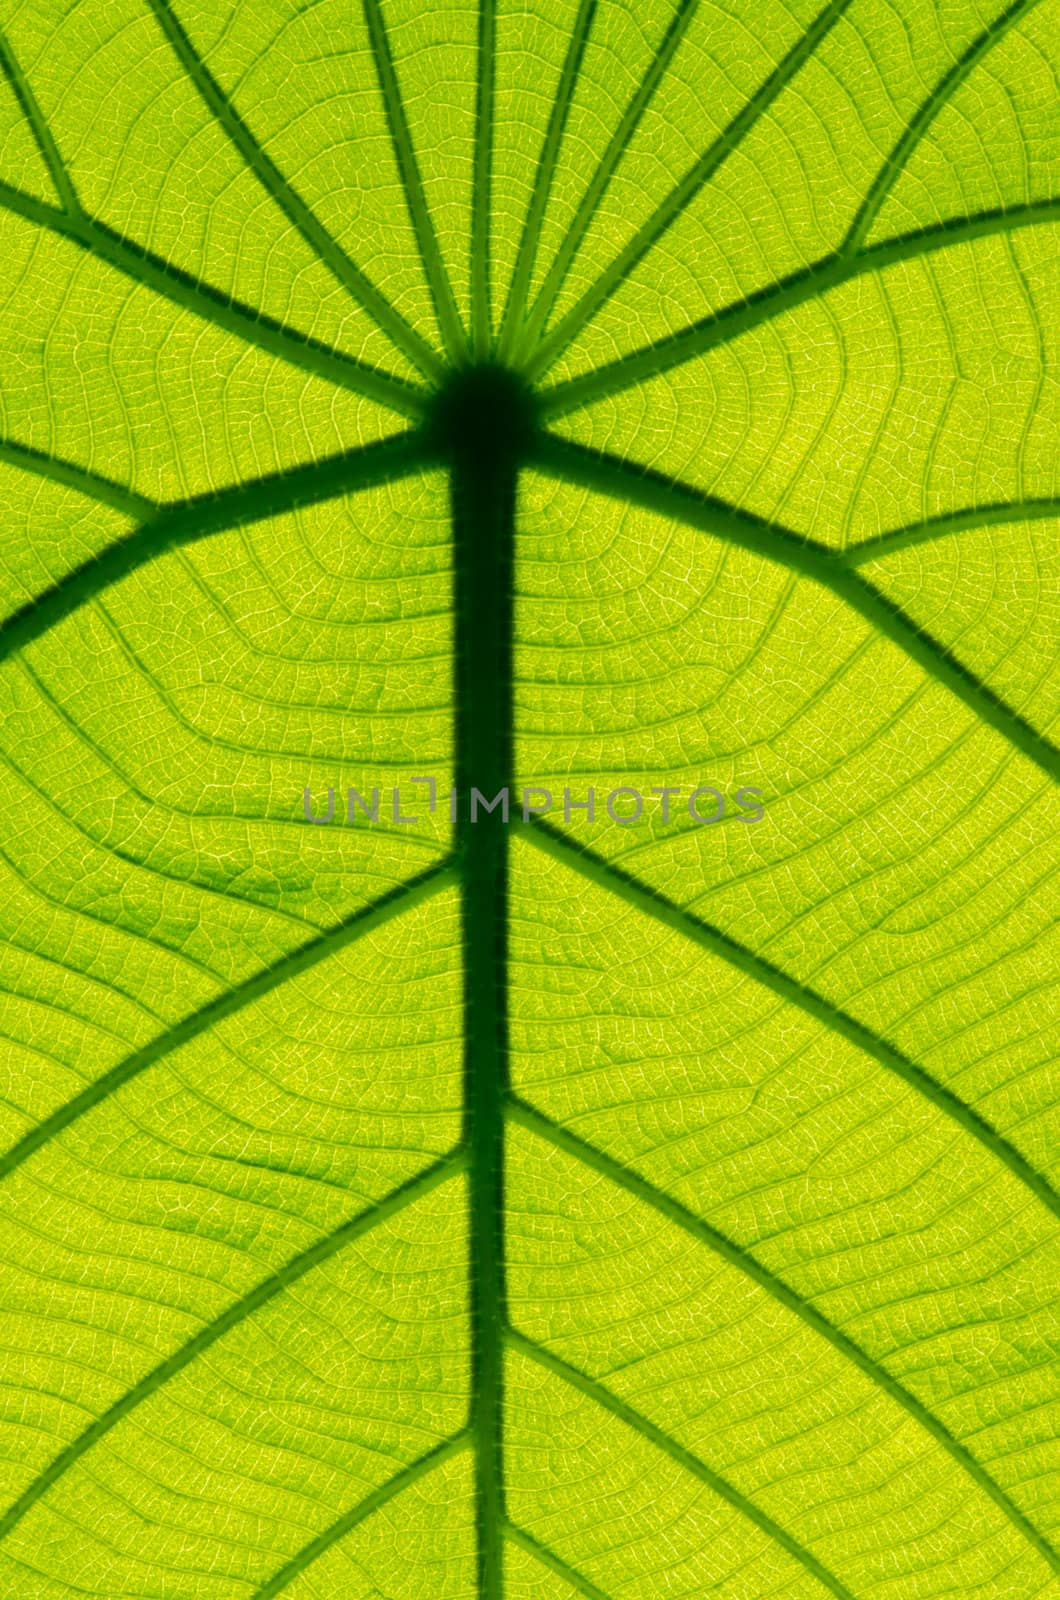 green leaf texture as background by heinteh